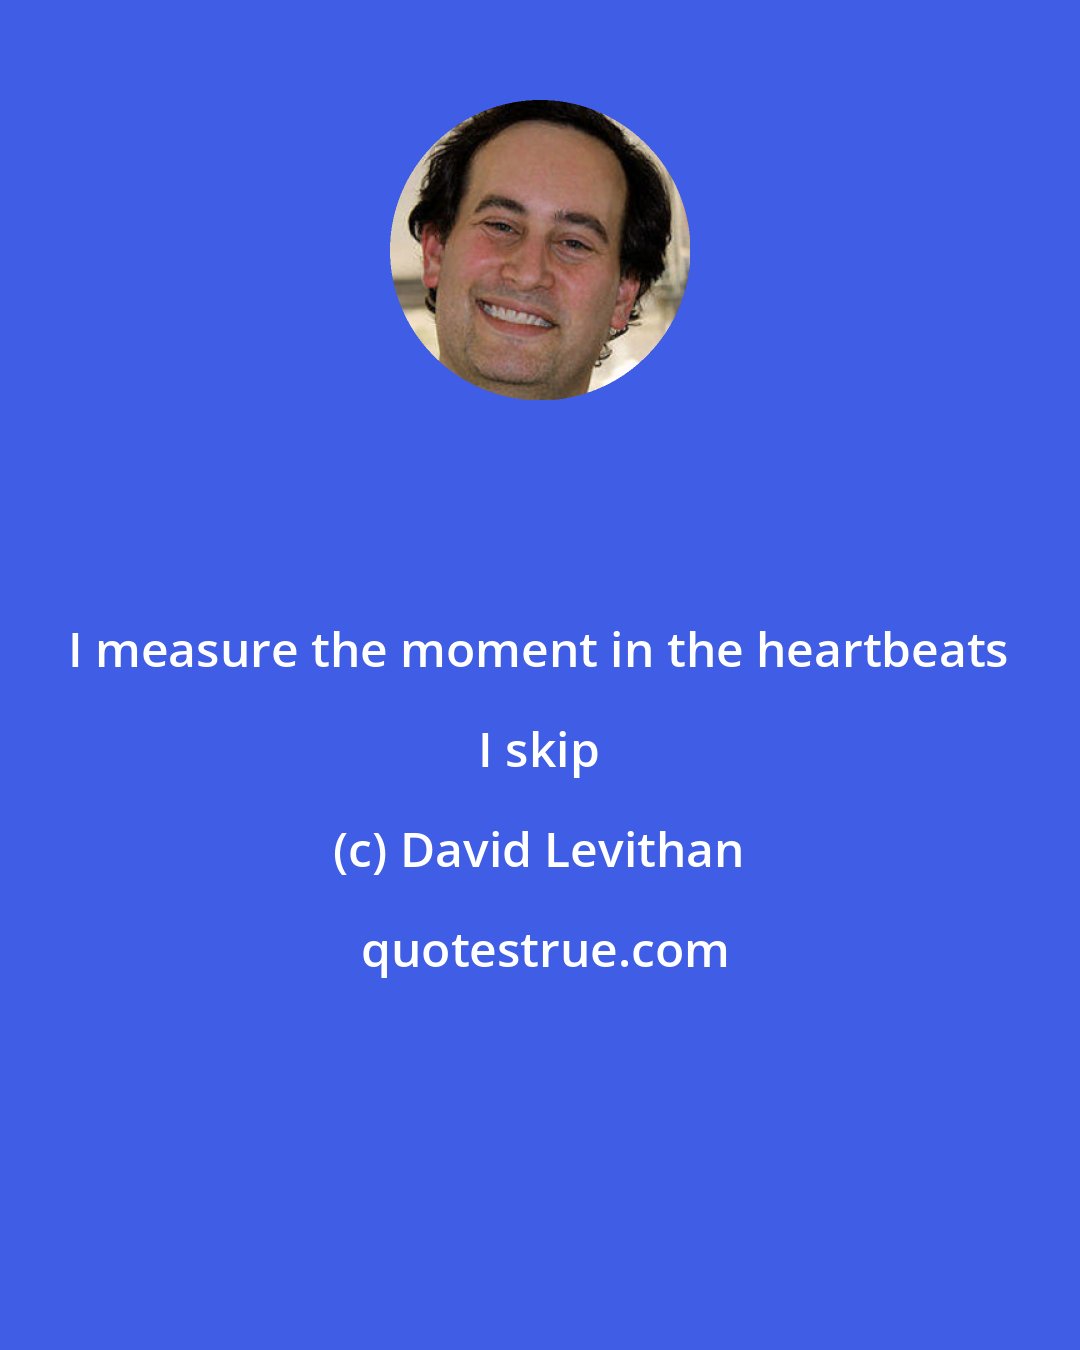 David Levithan: I measure the moment in the heartbeats I skip